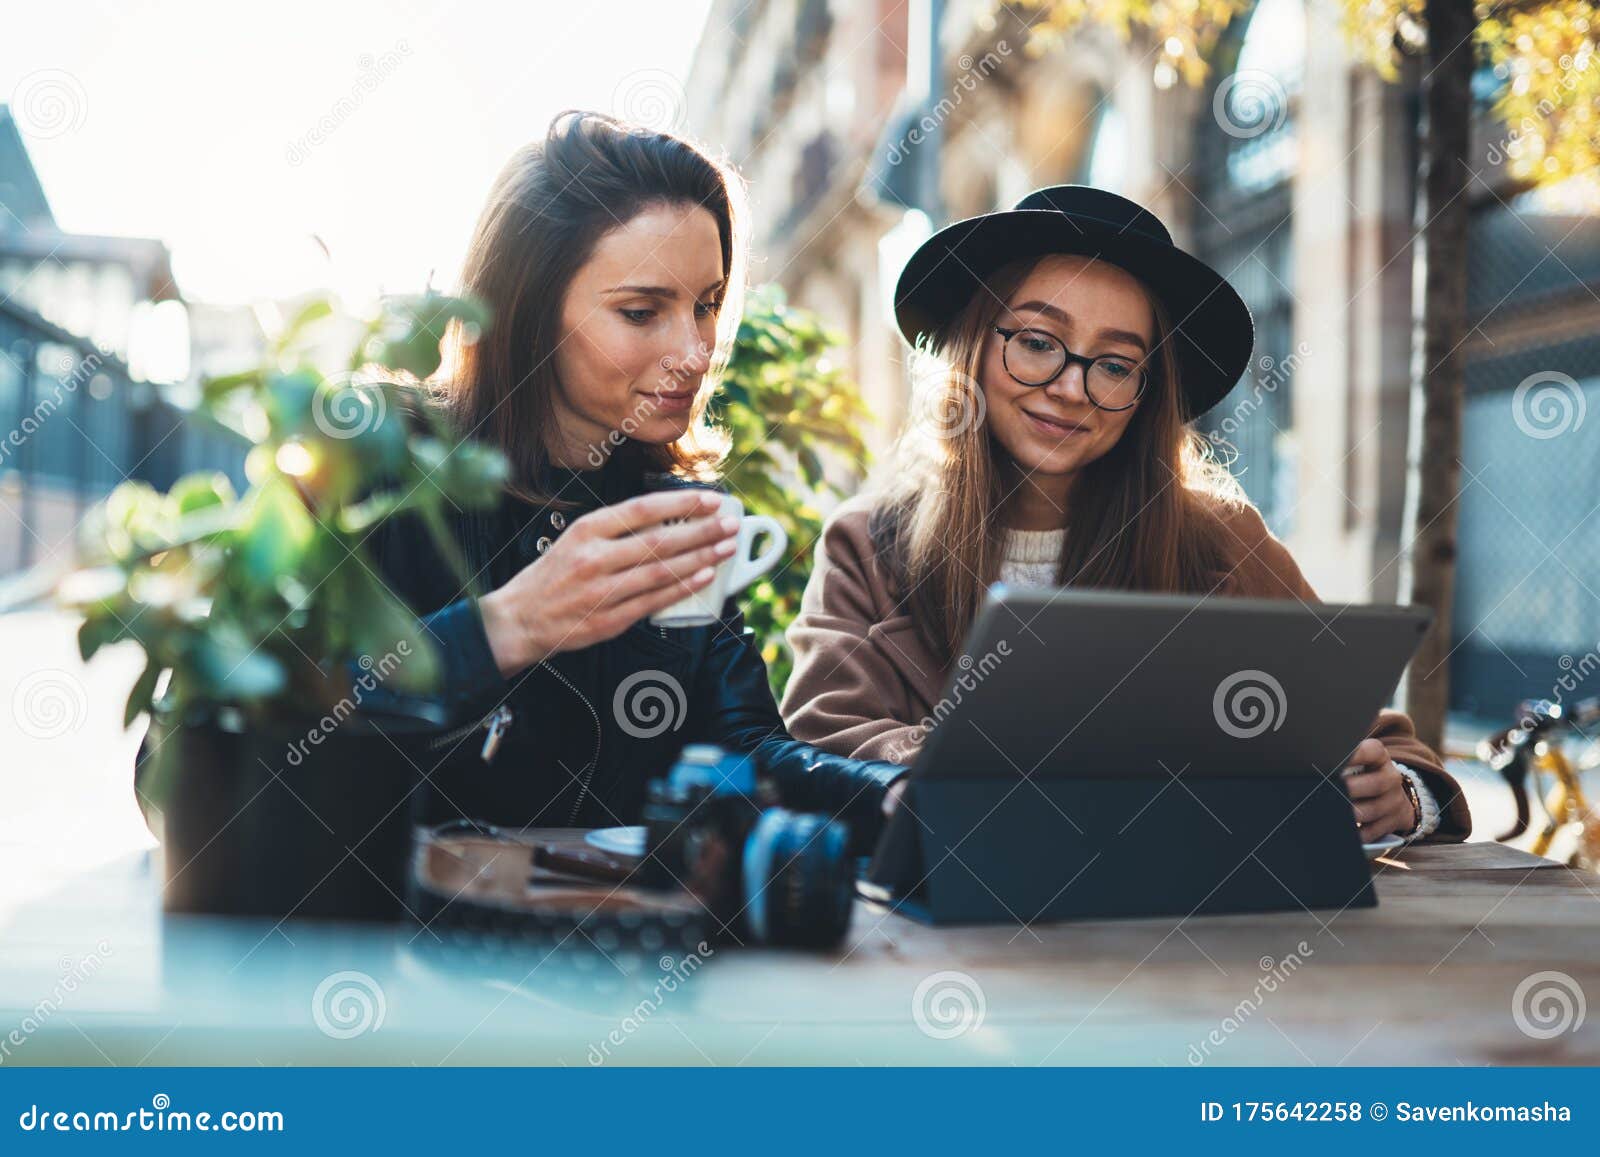 friends businesswoman using digital tablet. girls sitting in cafe. busines communication. internet laptop technology working